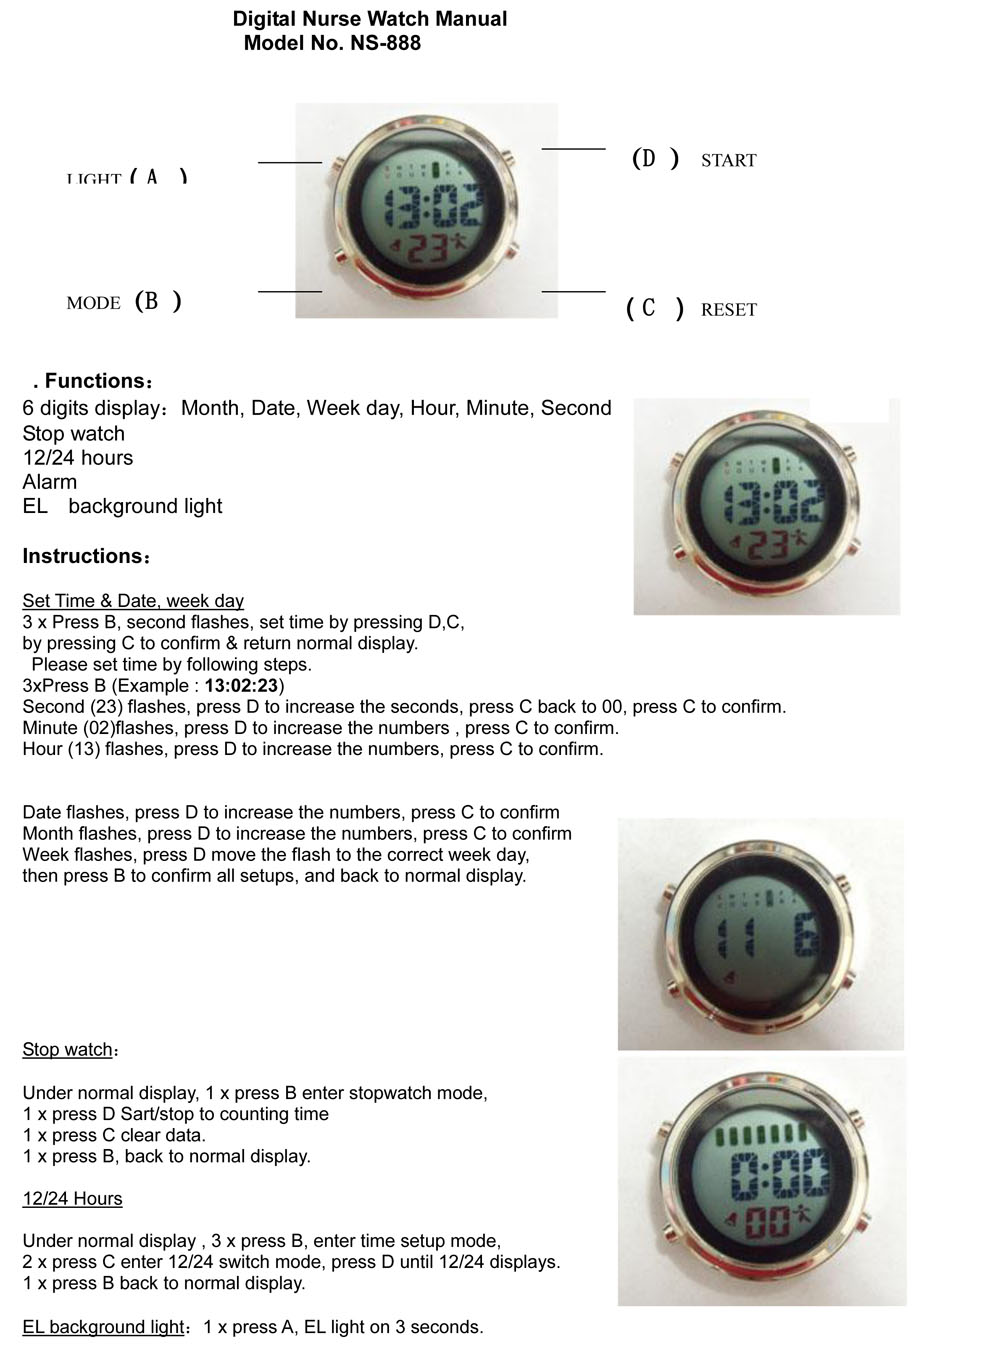 NS-888 Digital Nurse Watch Instruction 